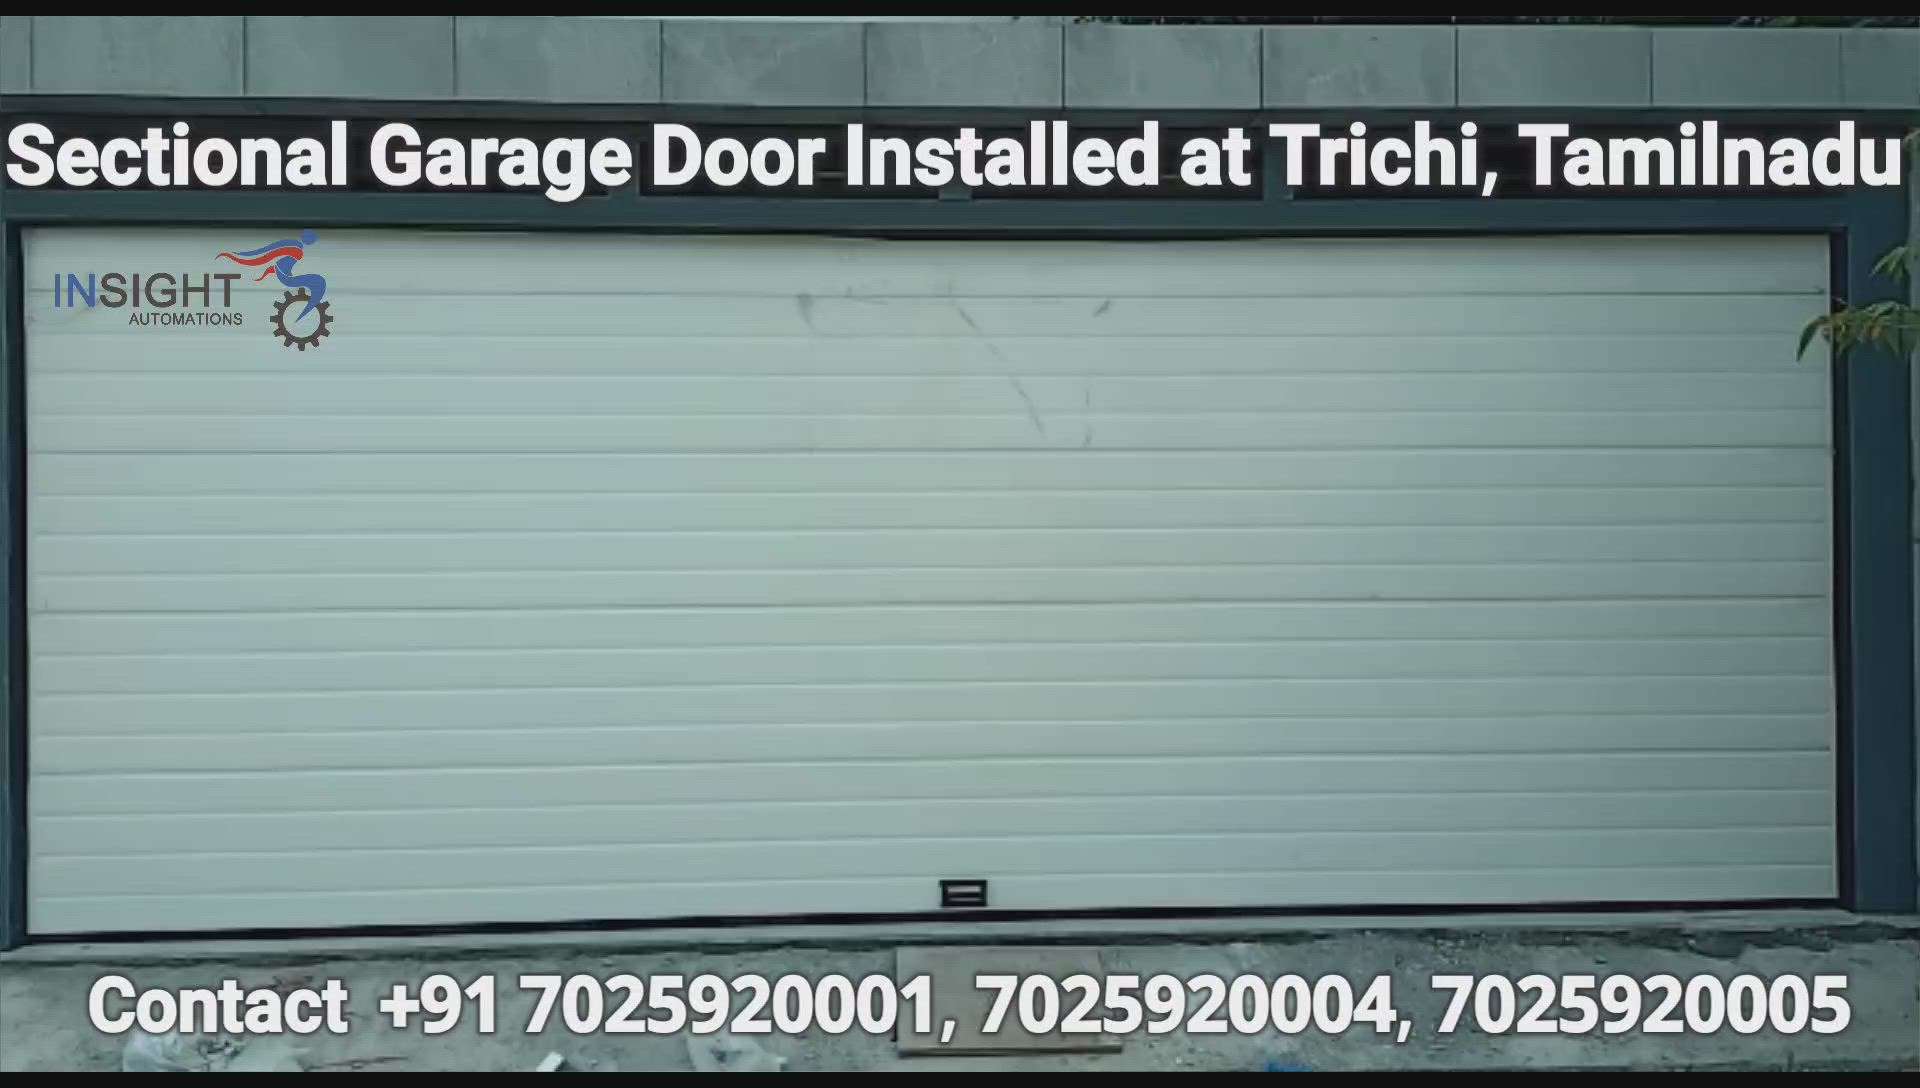 Garage Door Installation
#insightautomations
#garagedoor